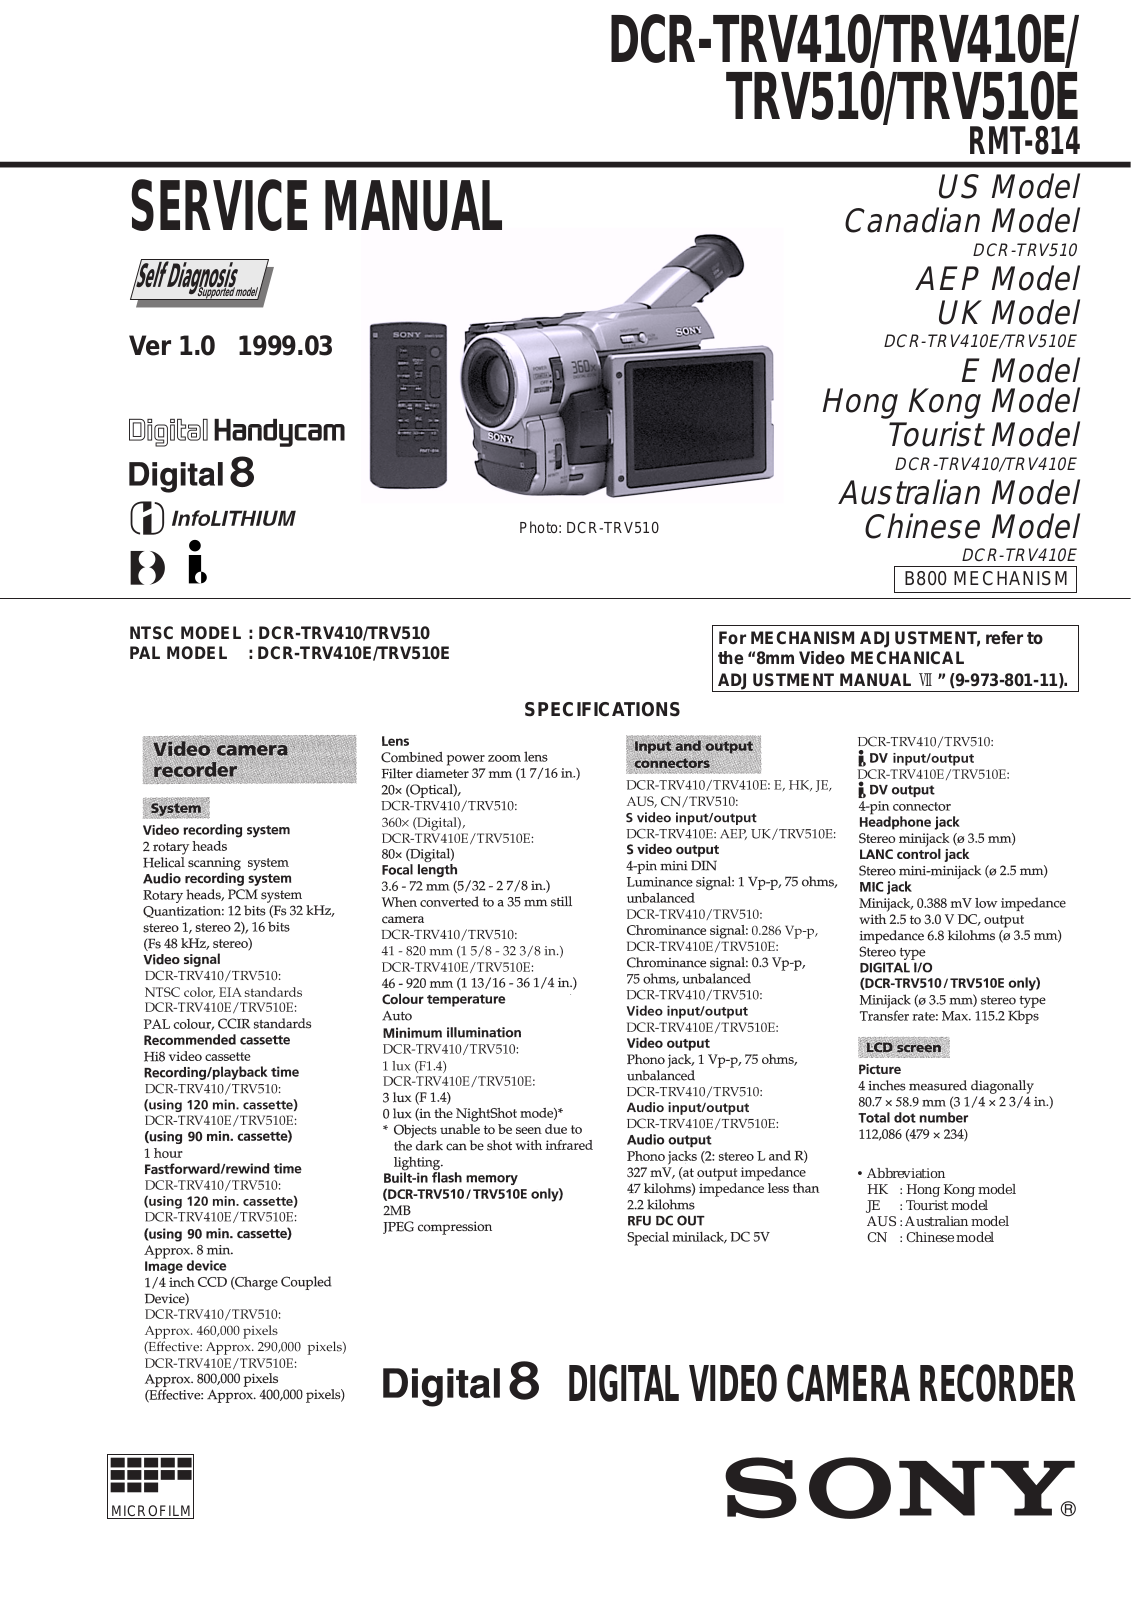 Sony RMT-814, DCR-TRV510E, DCR-TRV510, DCR-TRV410E, DCR-TRV410 Service Manual